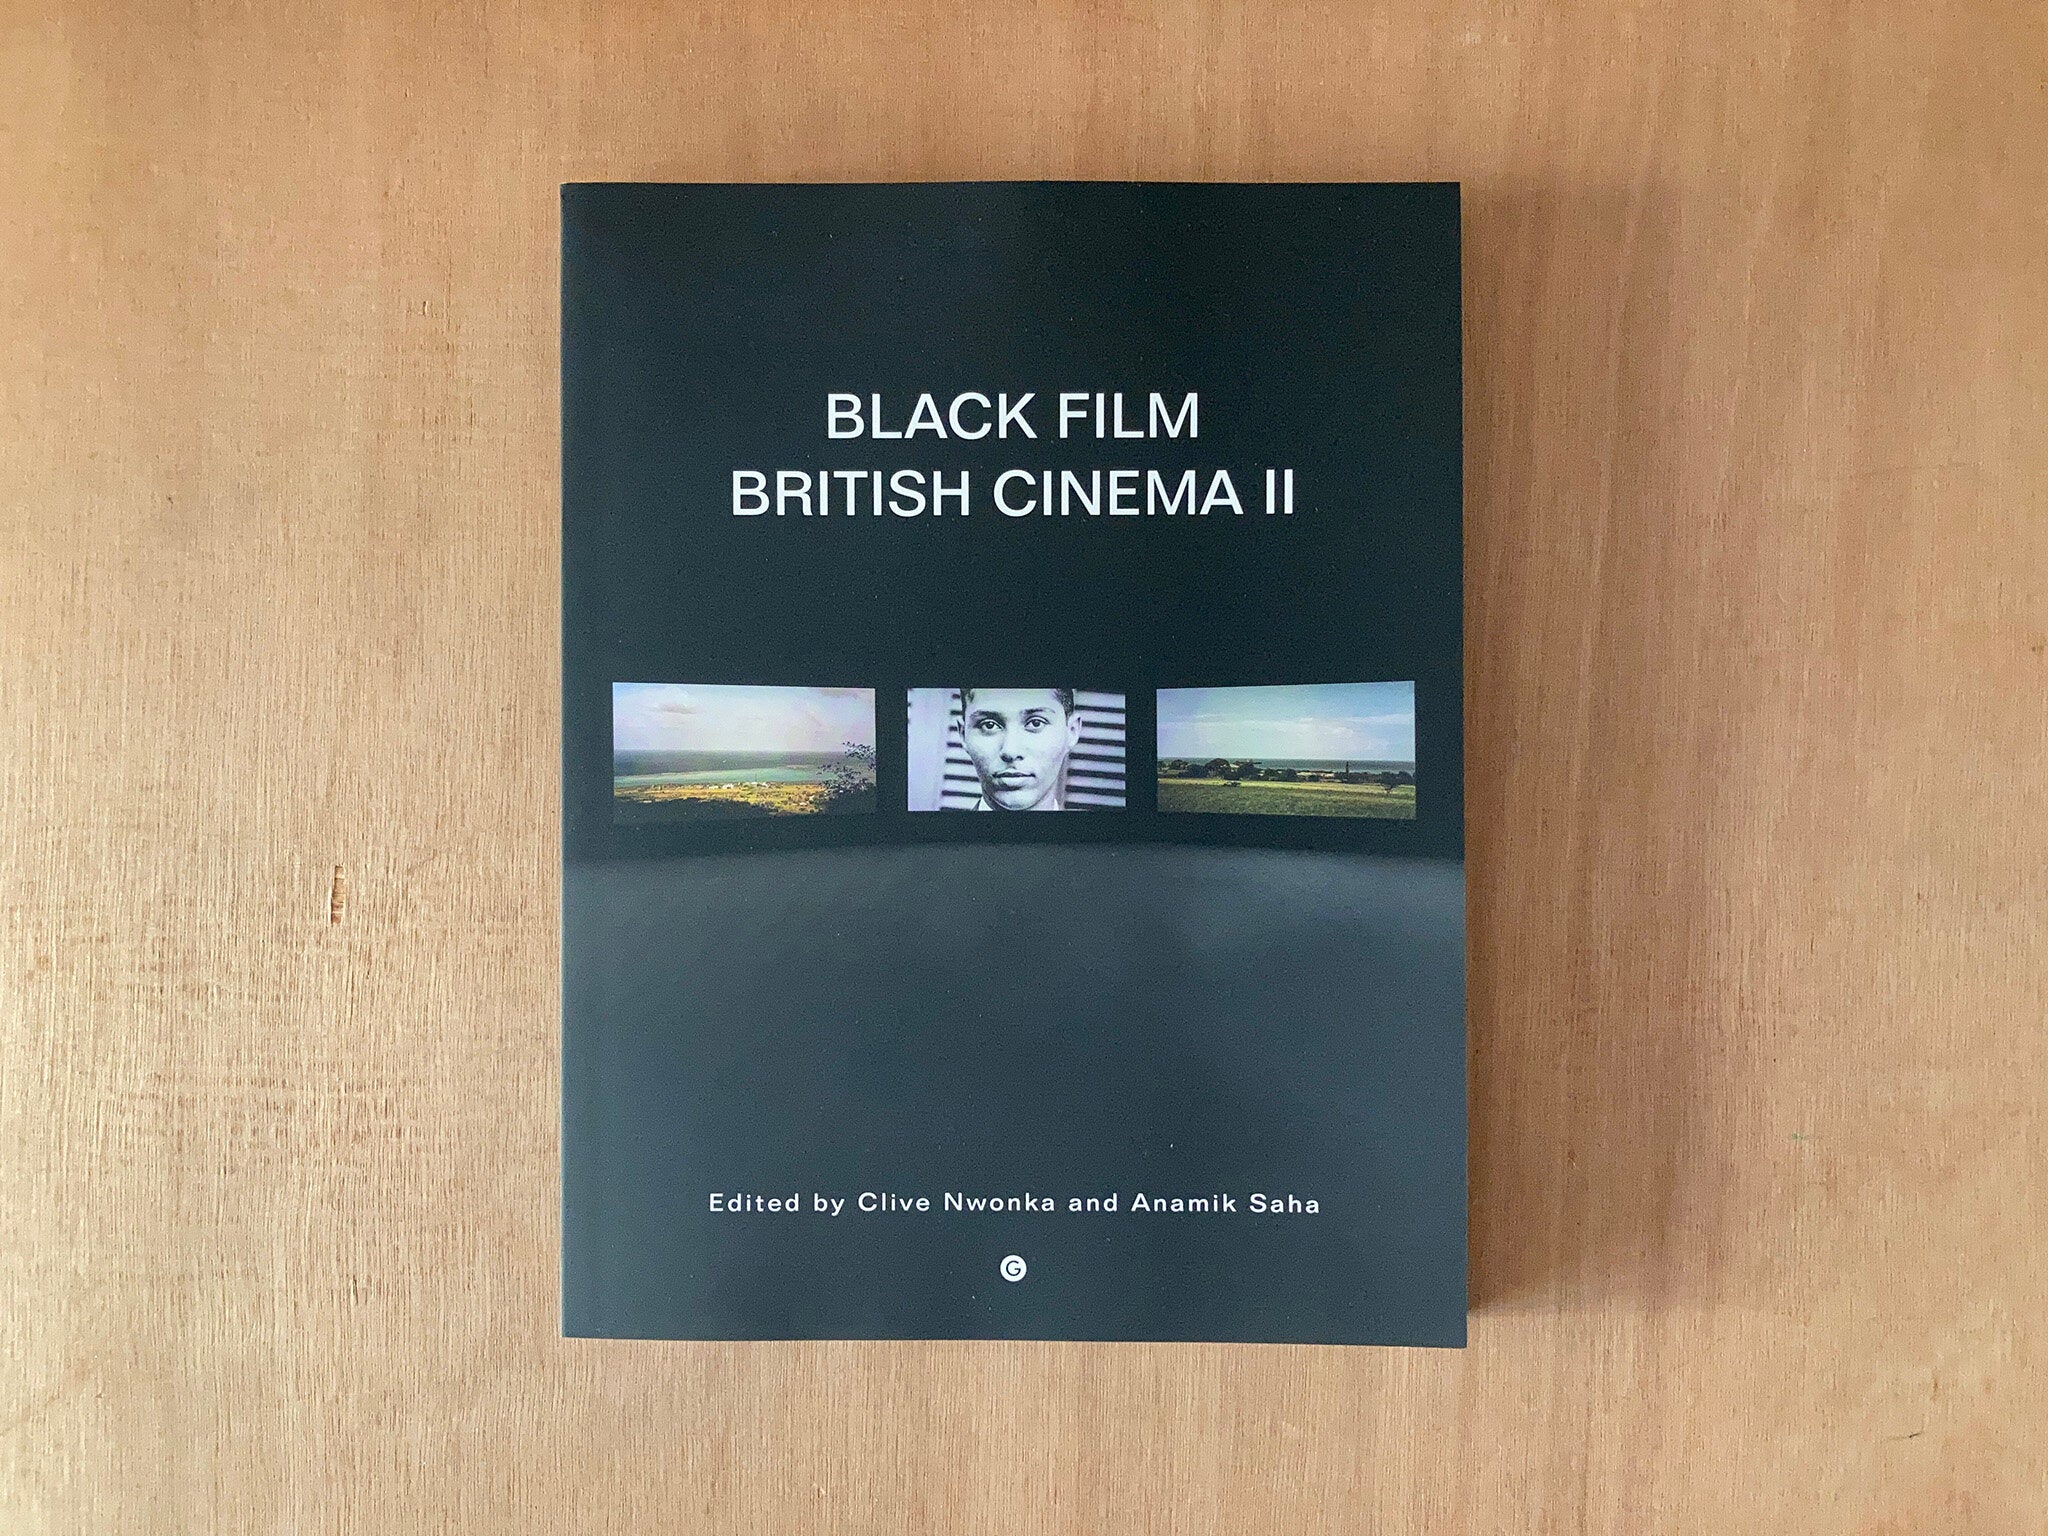 BLACK FILM BRITISH CINEMA II Edited by Clive Nwonka and Anamik Saha